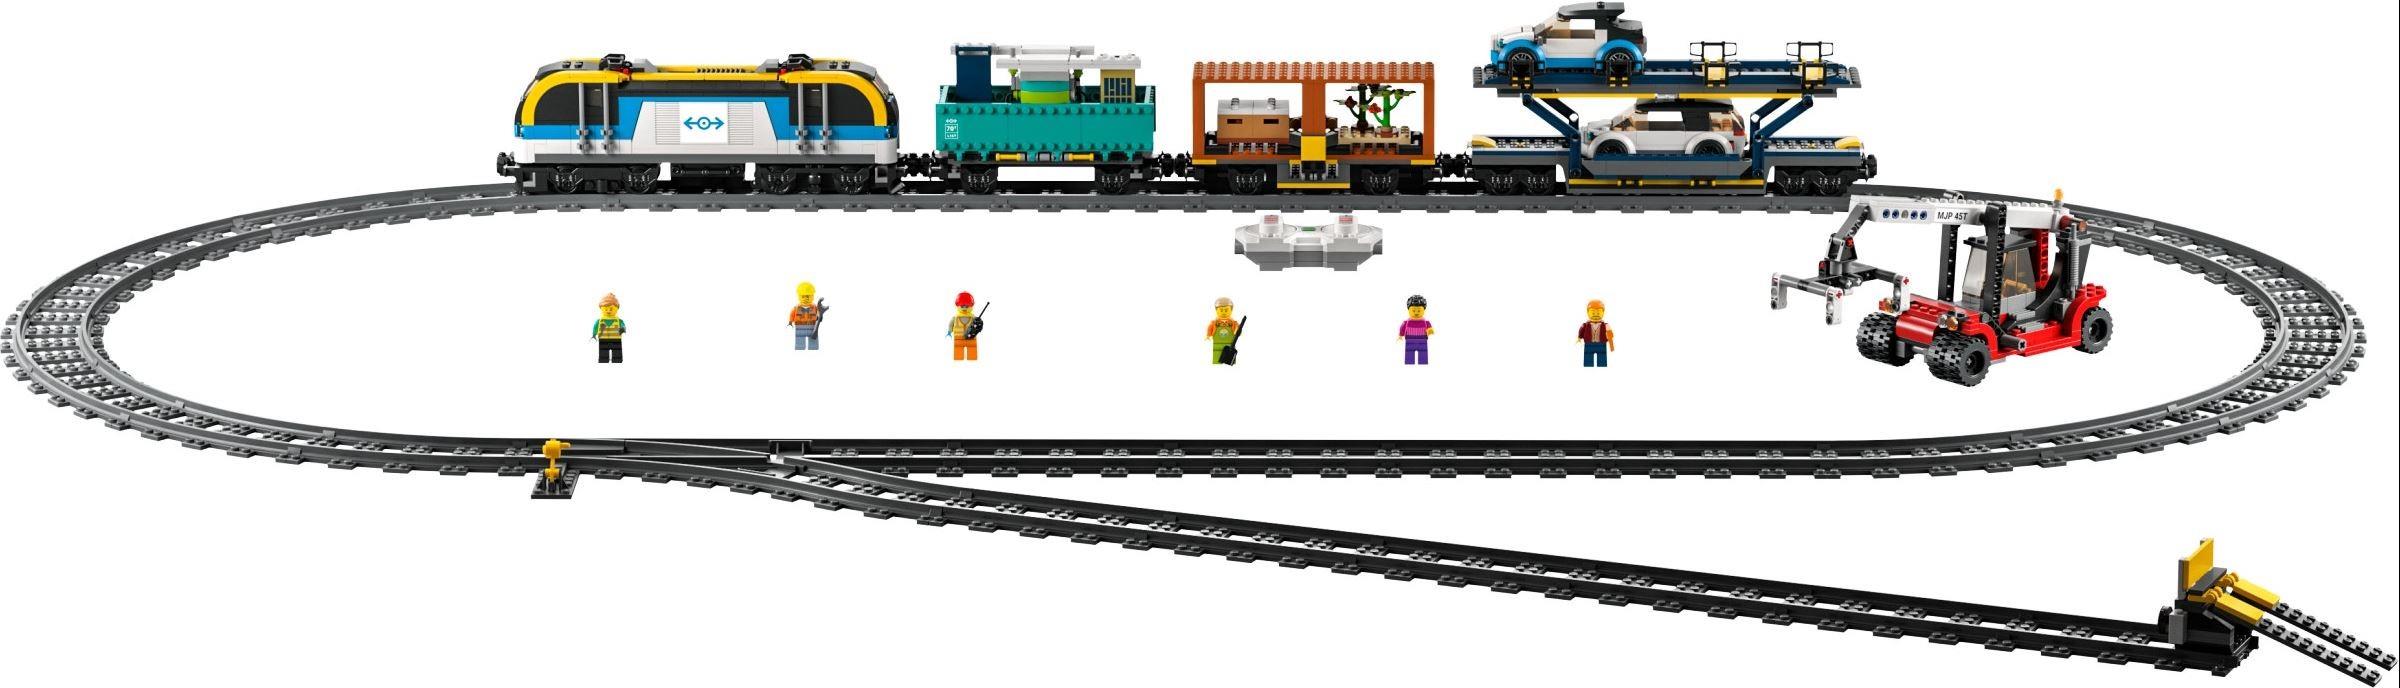 LEGO City 60336 - Treno Merci